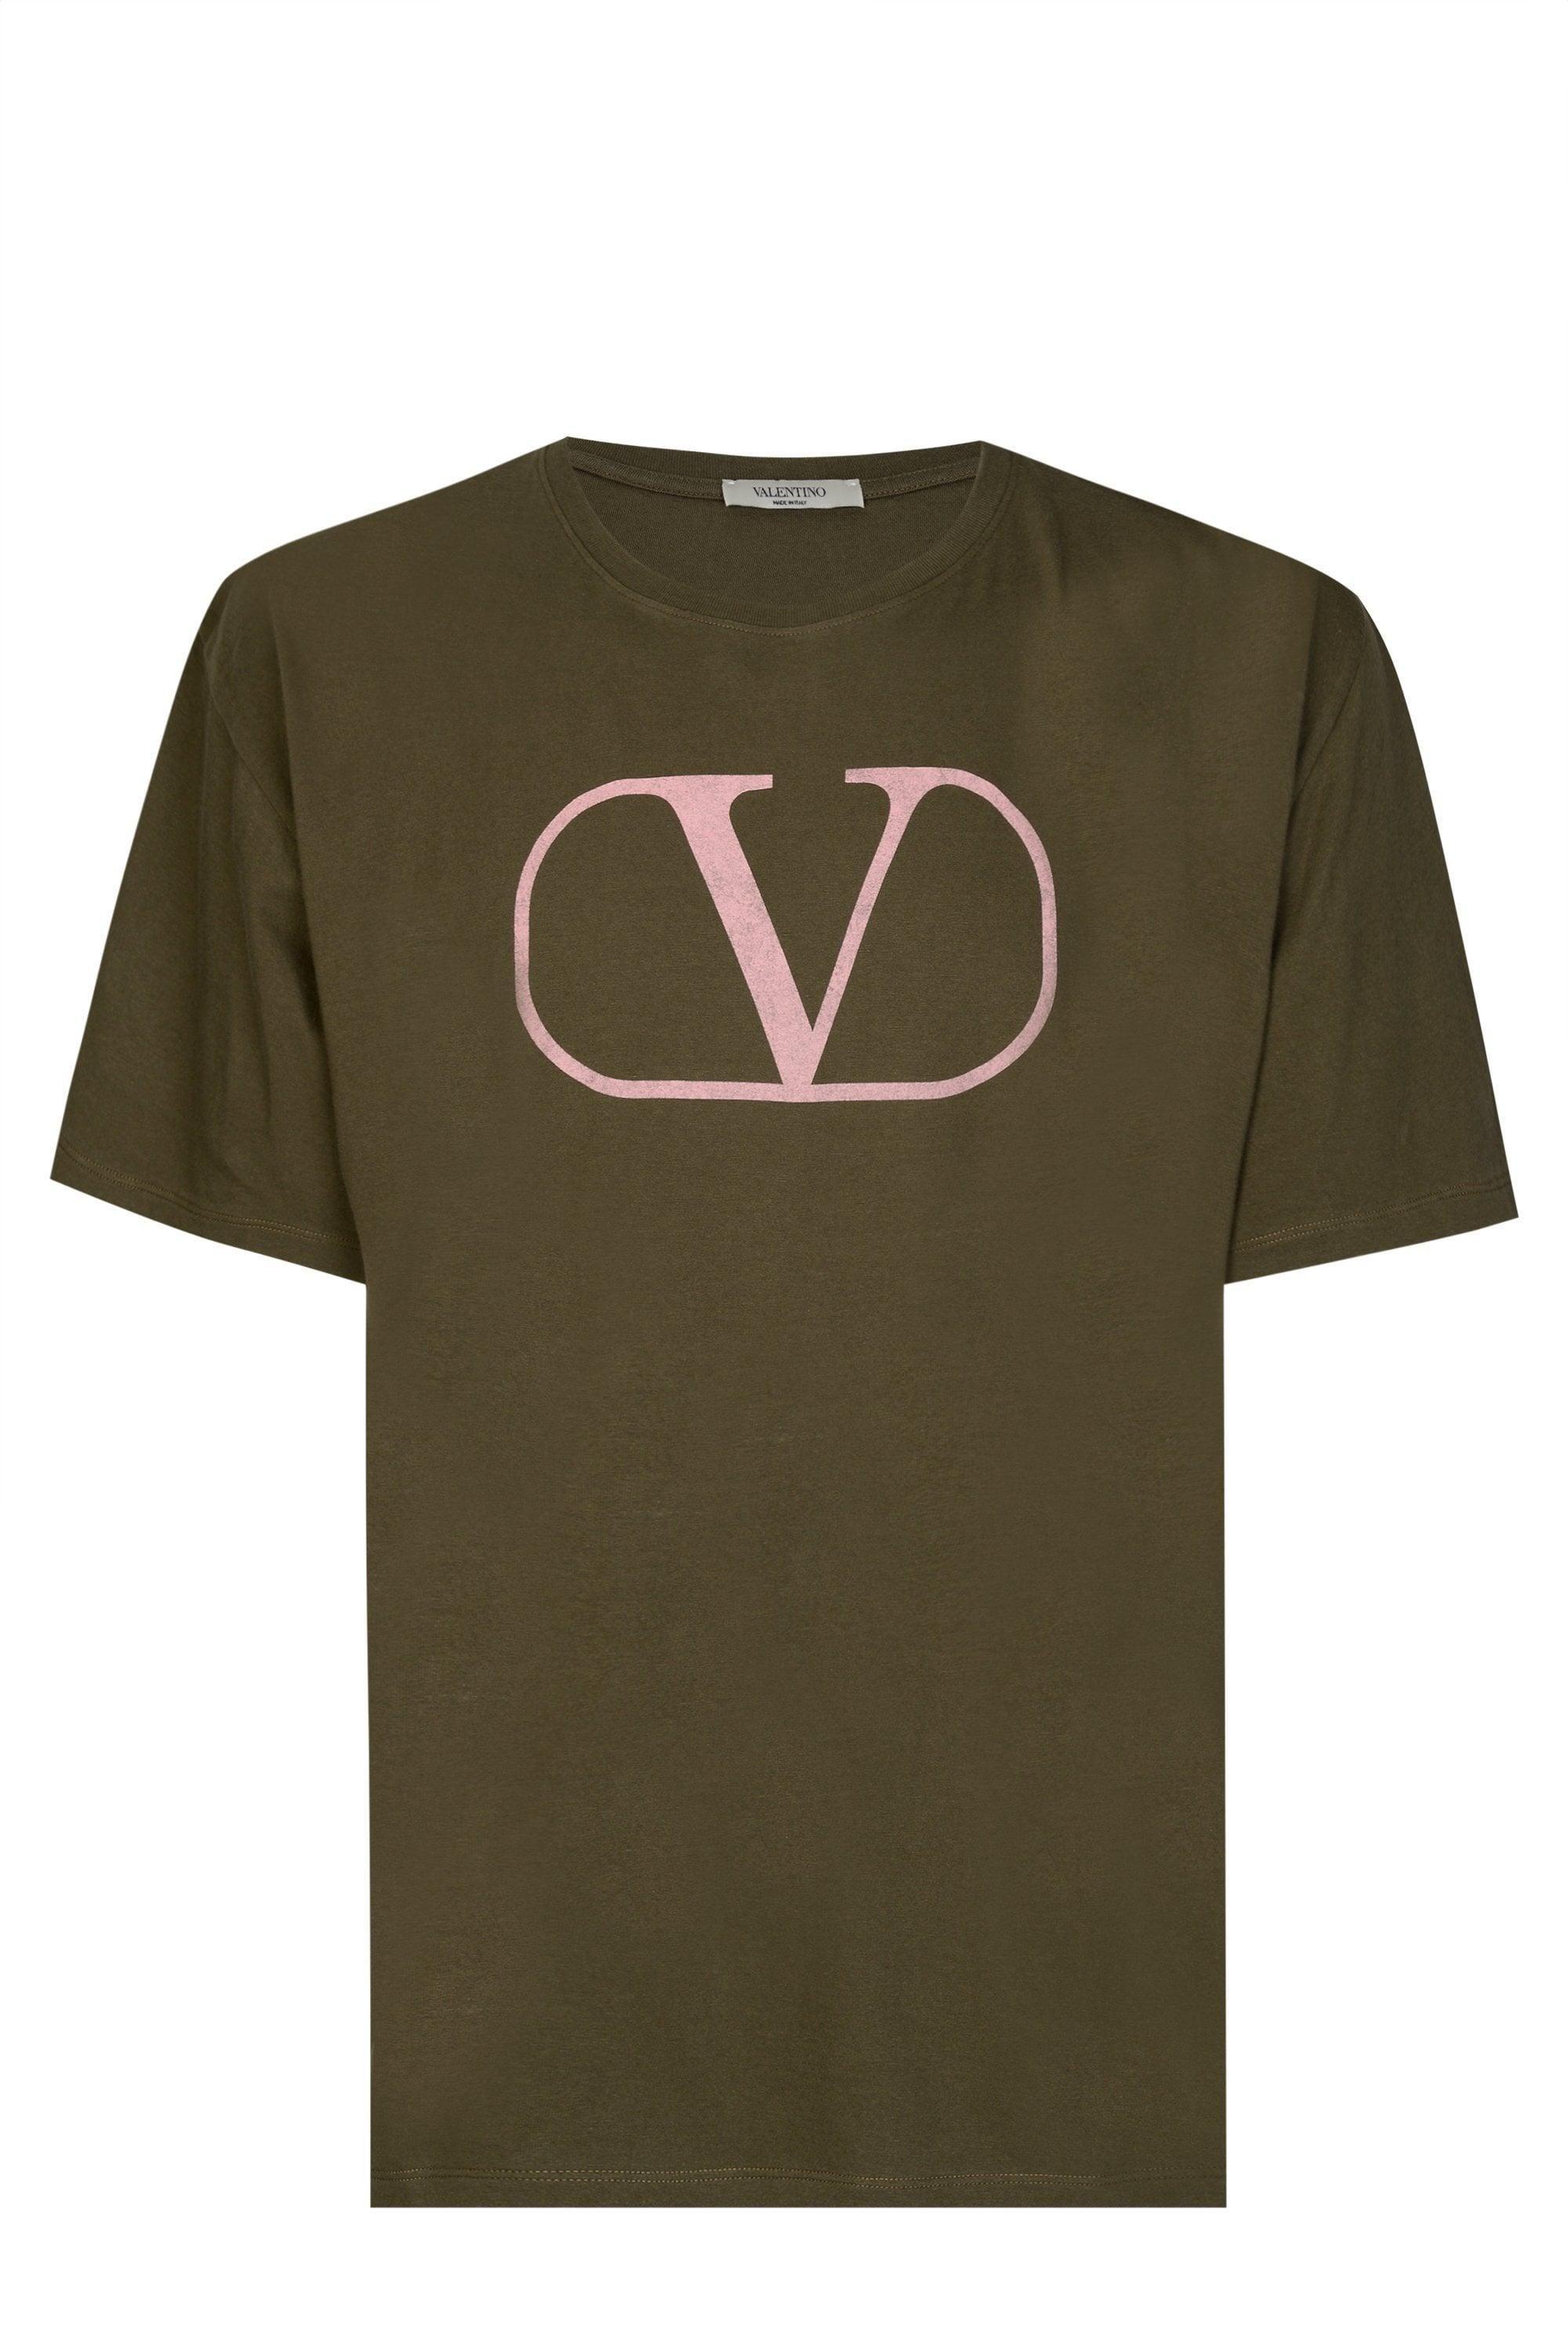 V Clothing Logo - Valentino V Logo T-shirt in Green for Men - Lyst